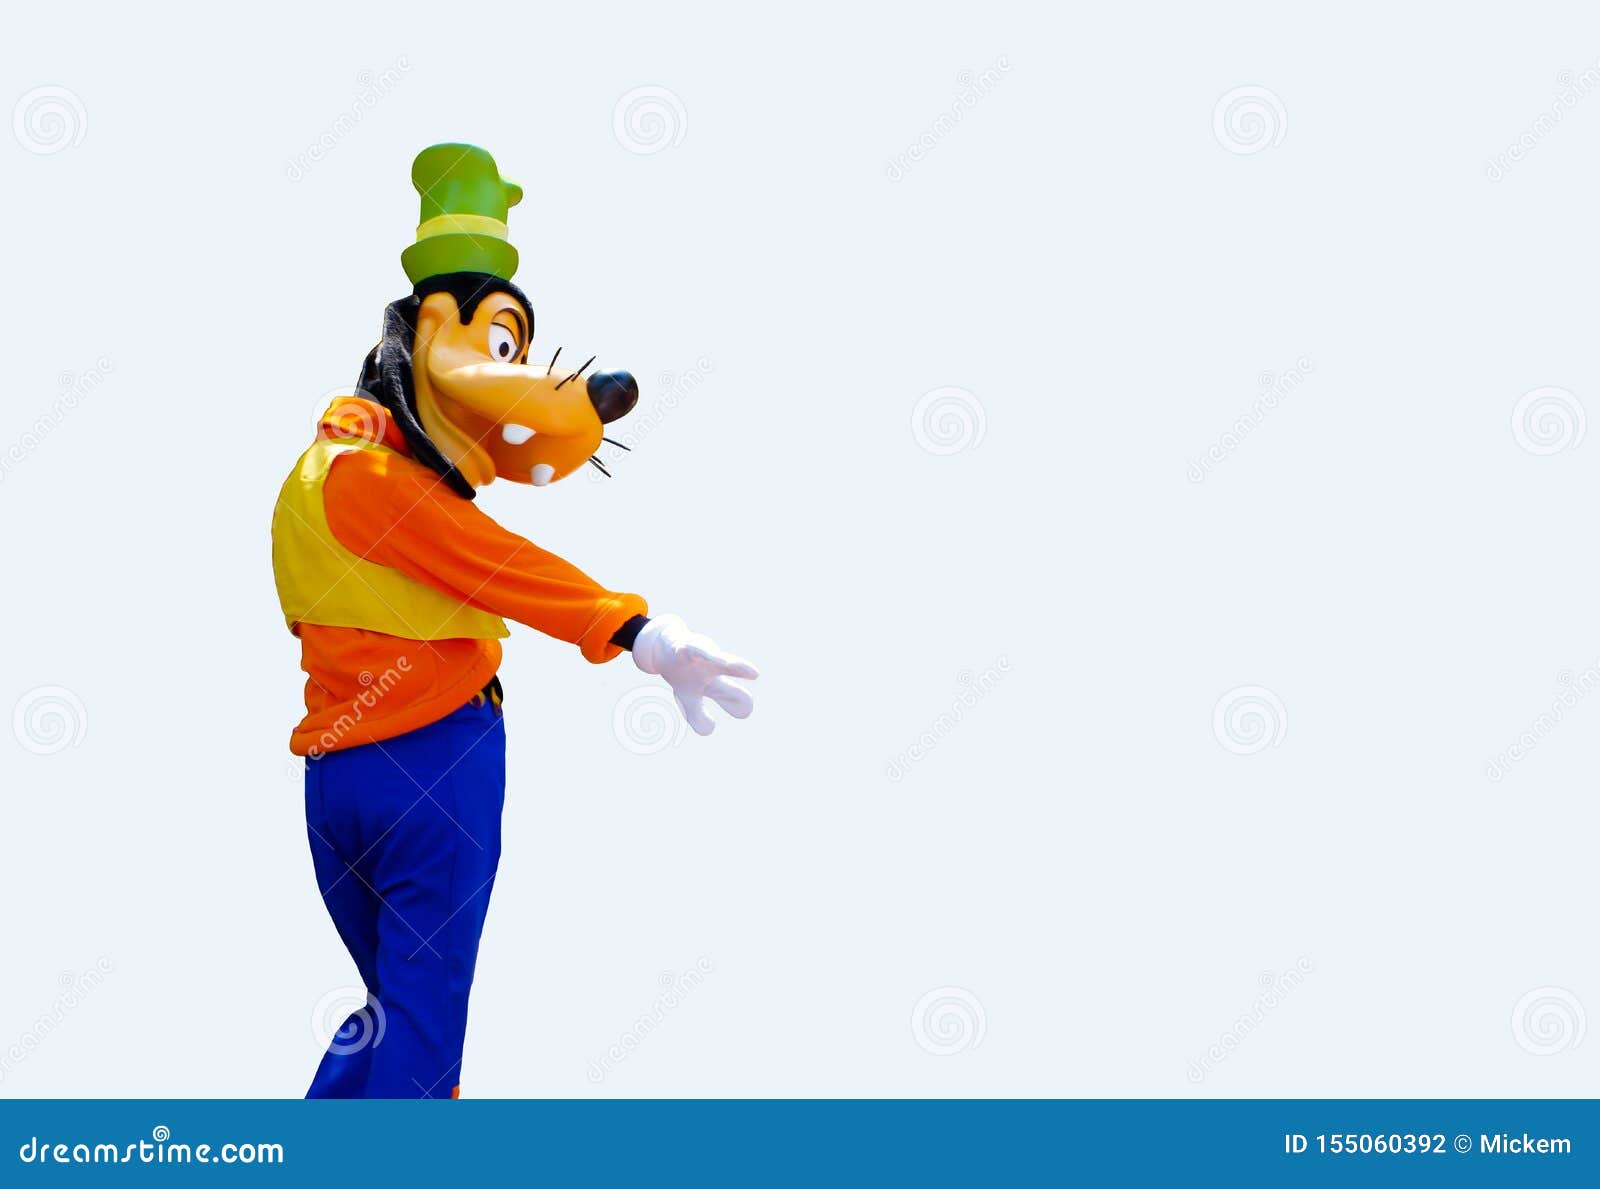 5,400 Disney Goofy Stock Photos - Free & Royalty-Free Stock Photos from  Dreamstime